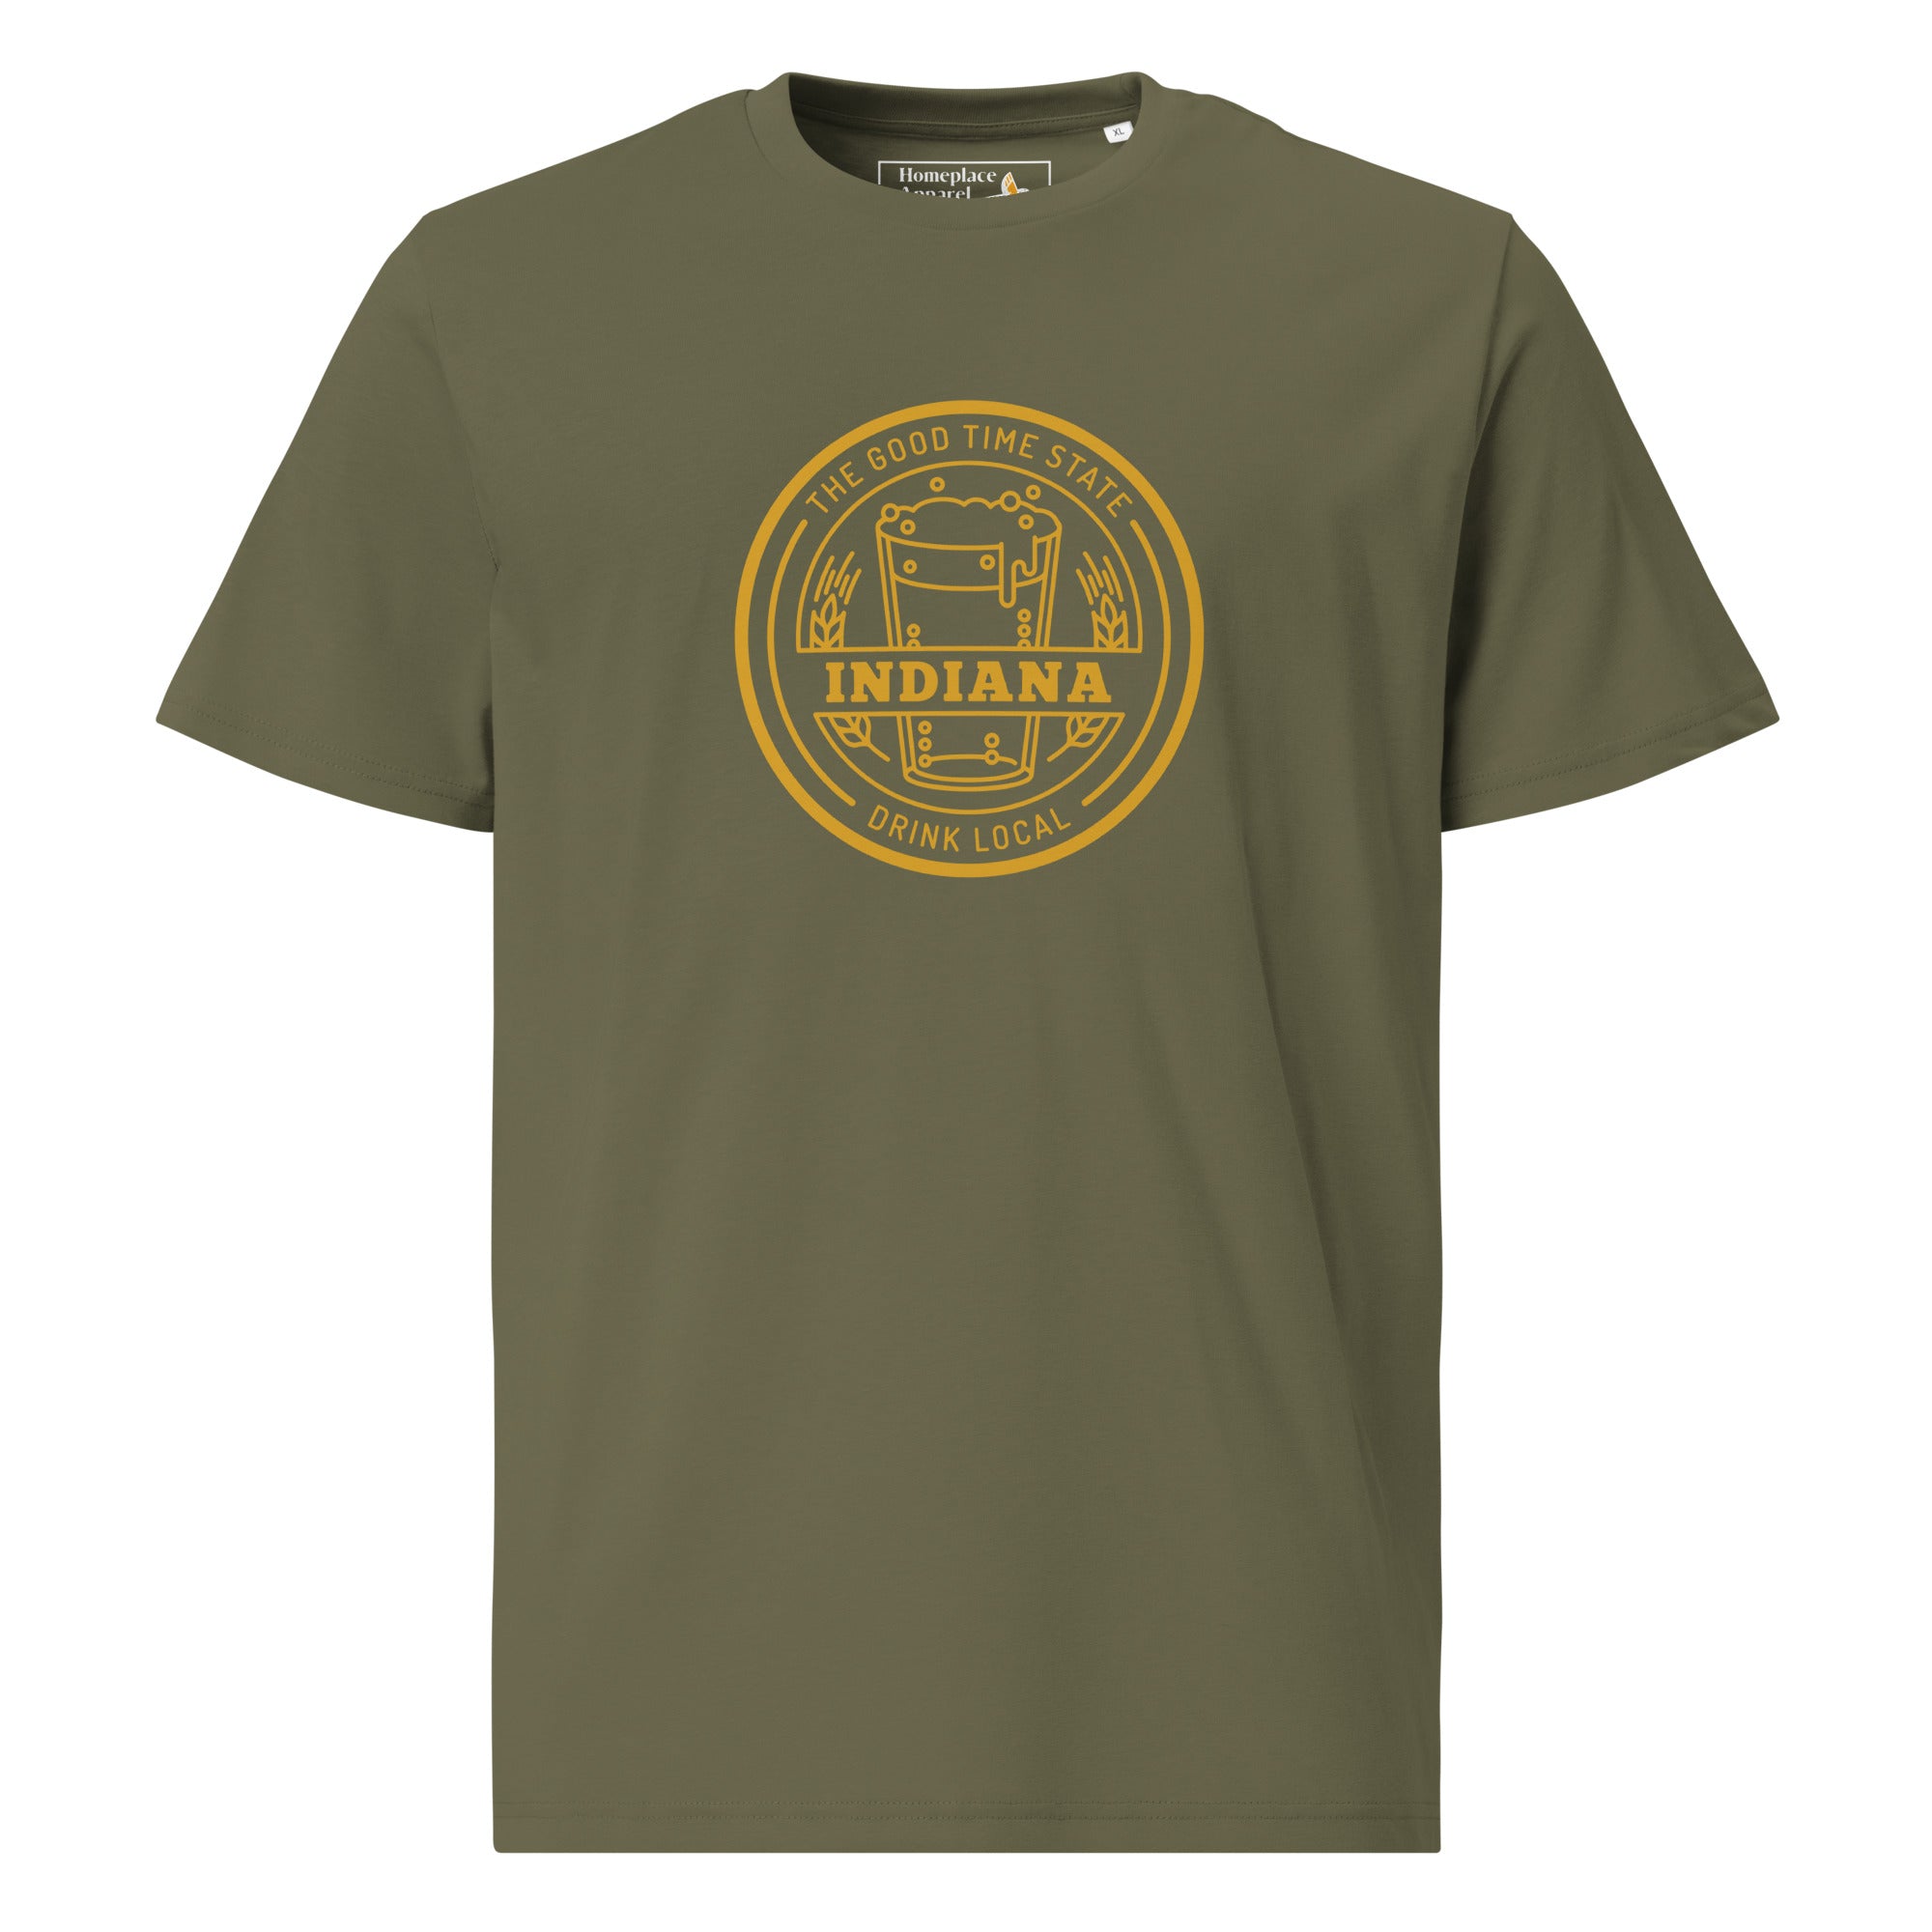 unisex-organic-cotton-t-shirt-khaki-front-65ce90401ba68.jpg